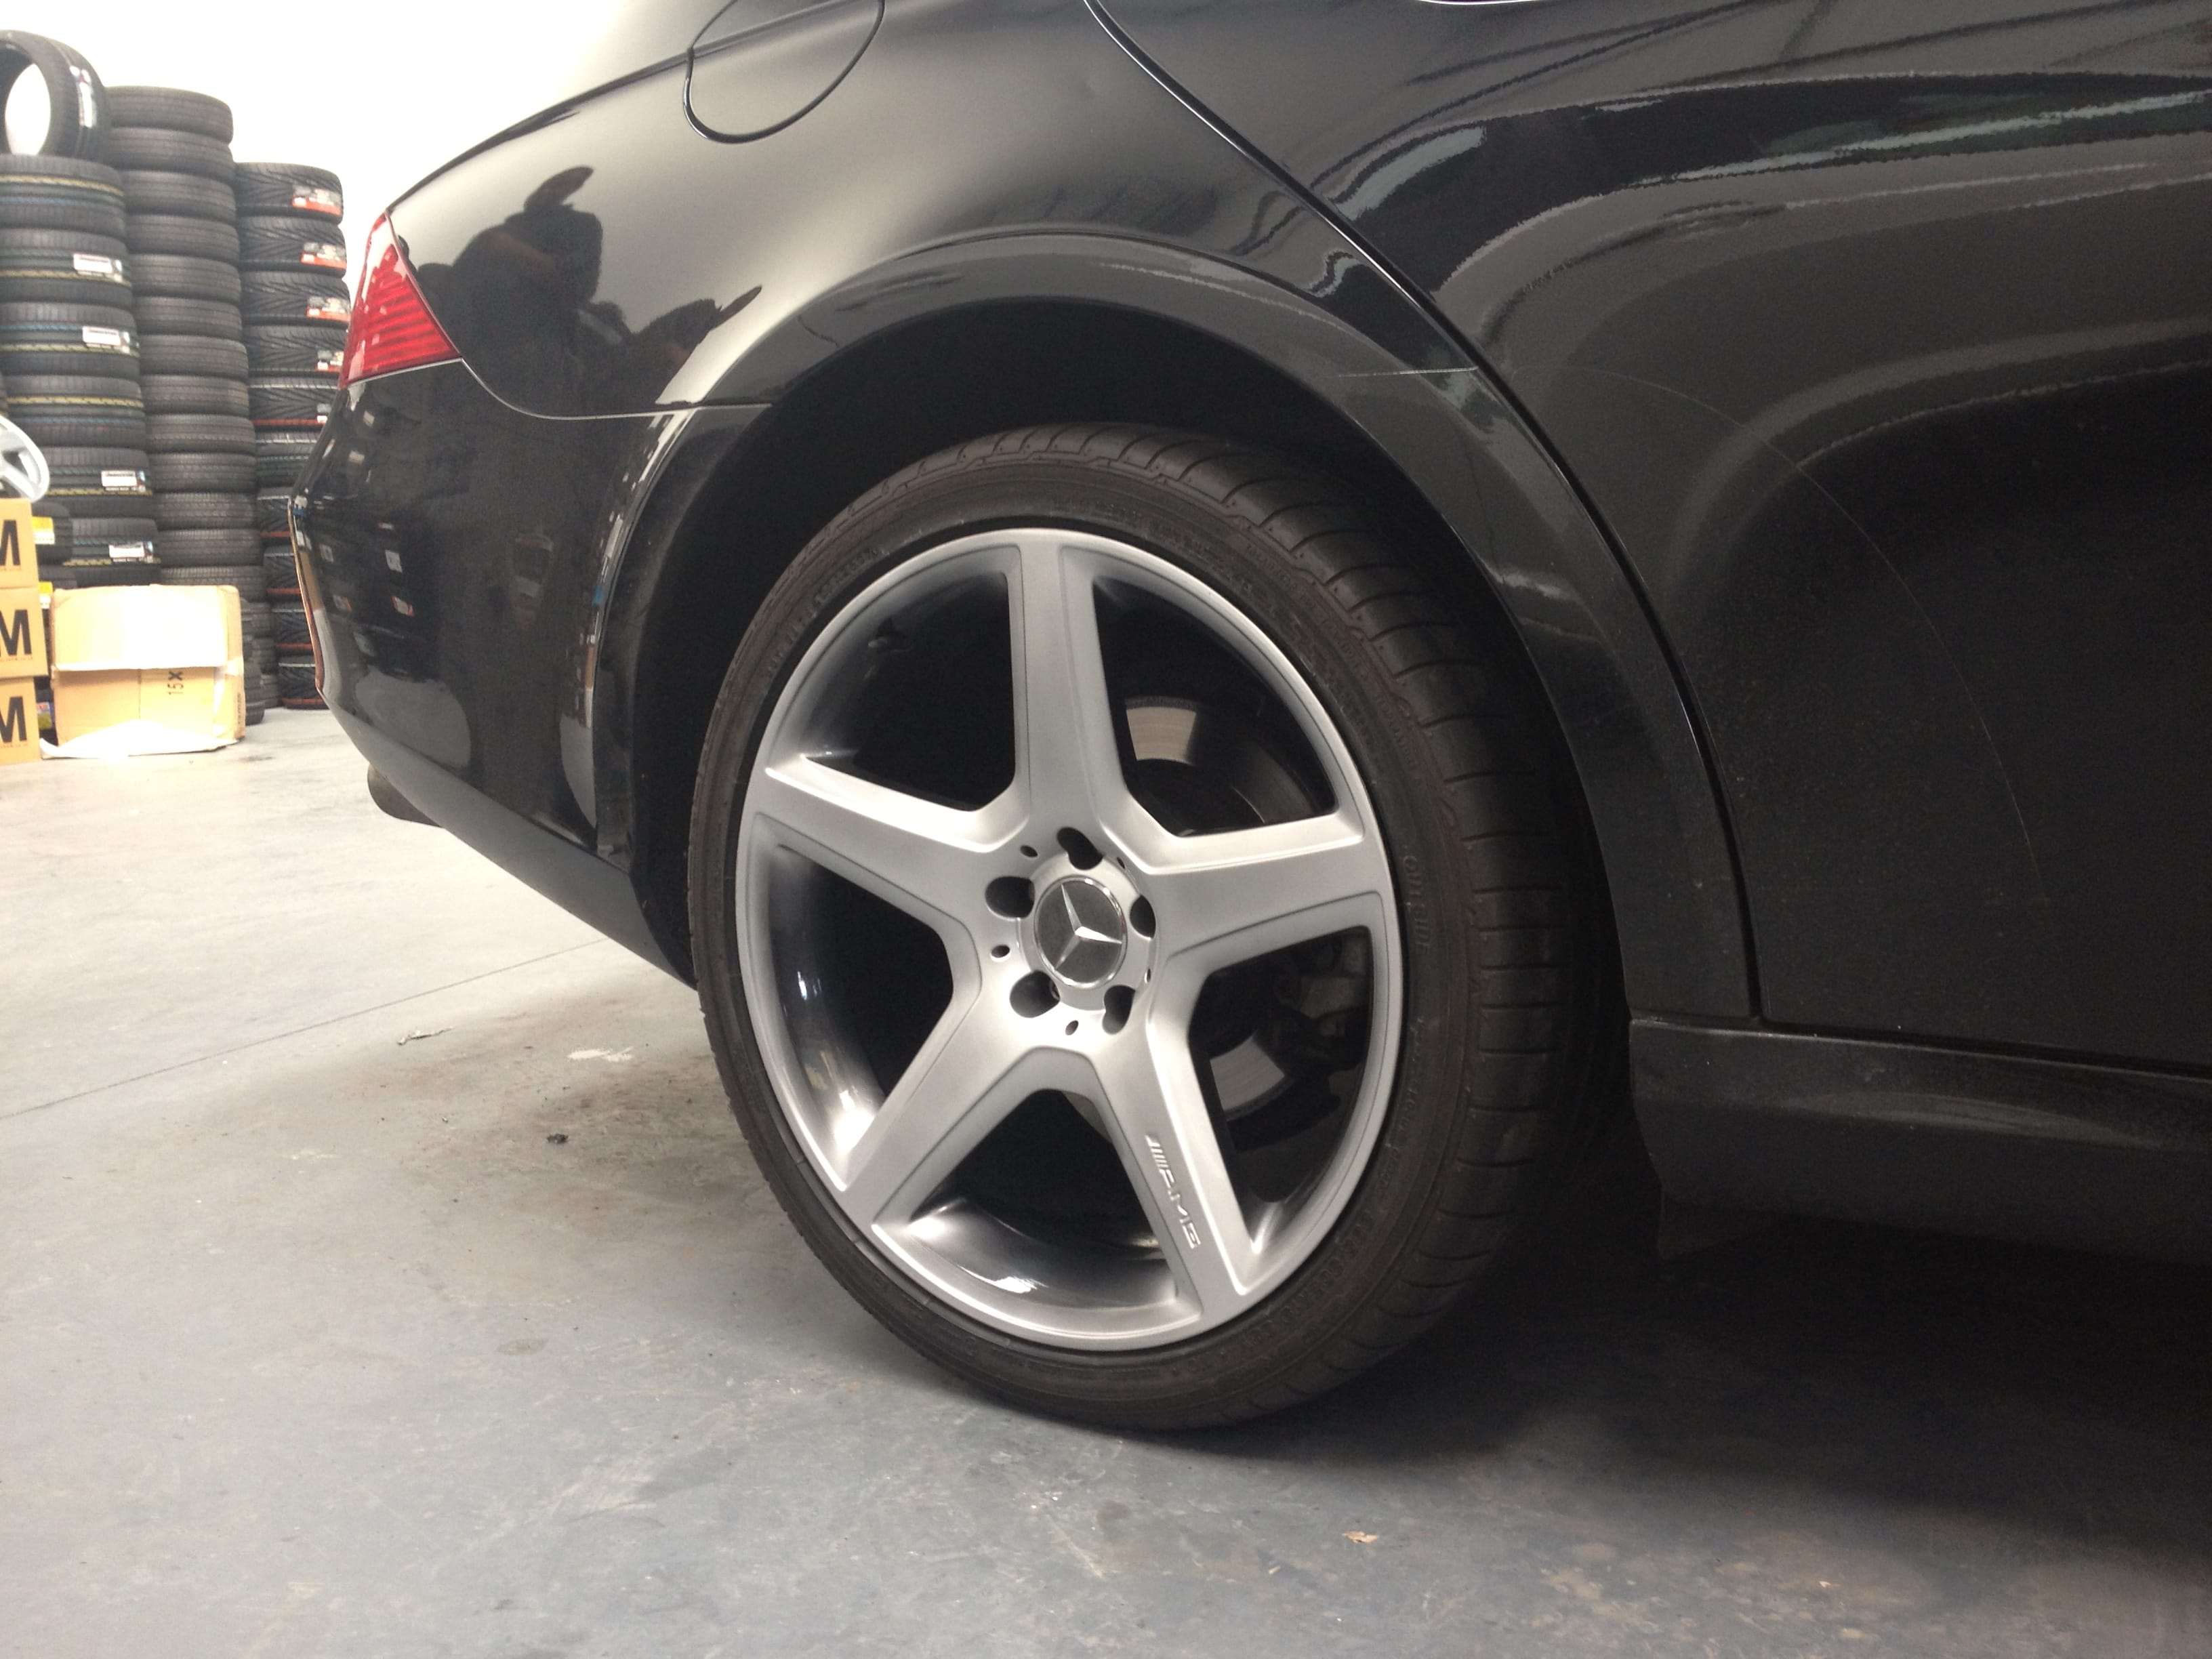 Mercedes CLS AMG alloy wheels refurbished